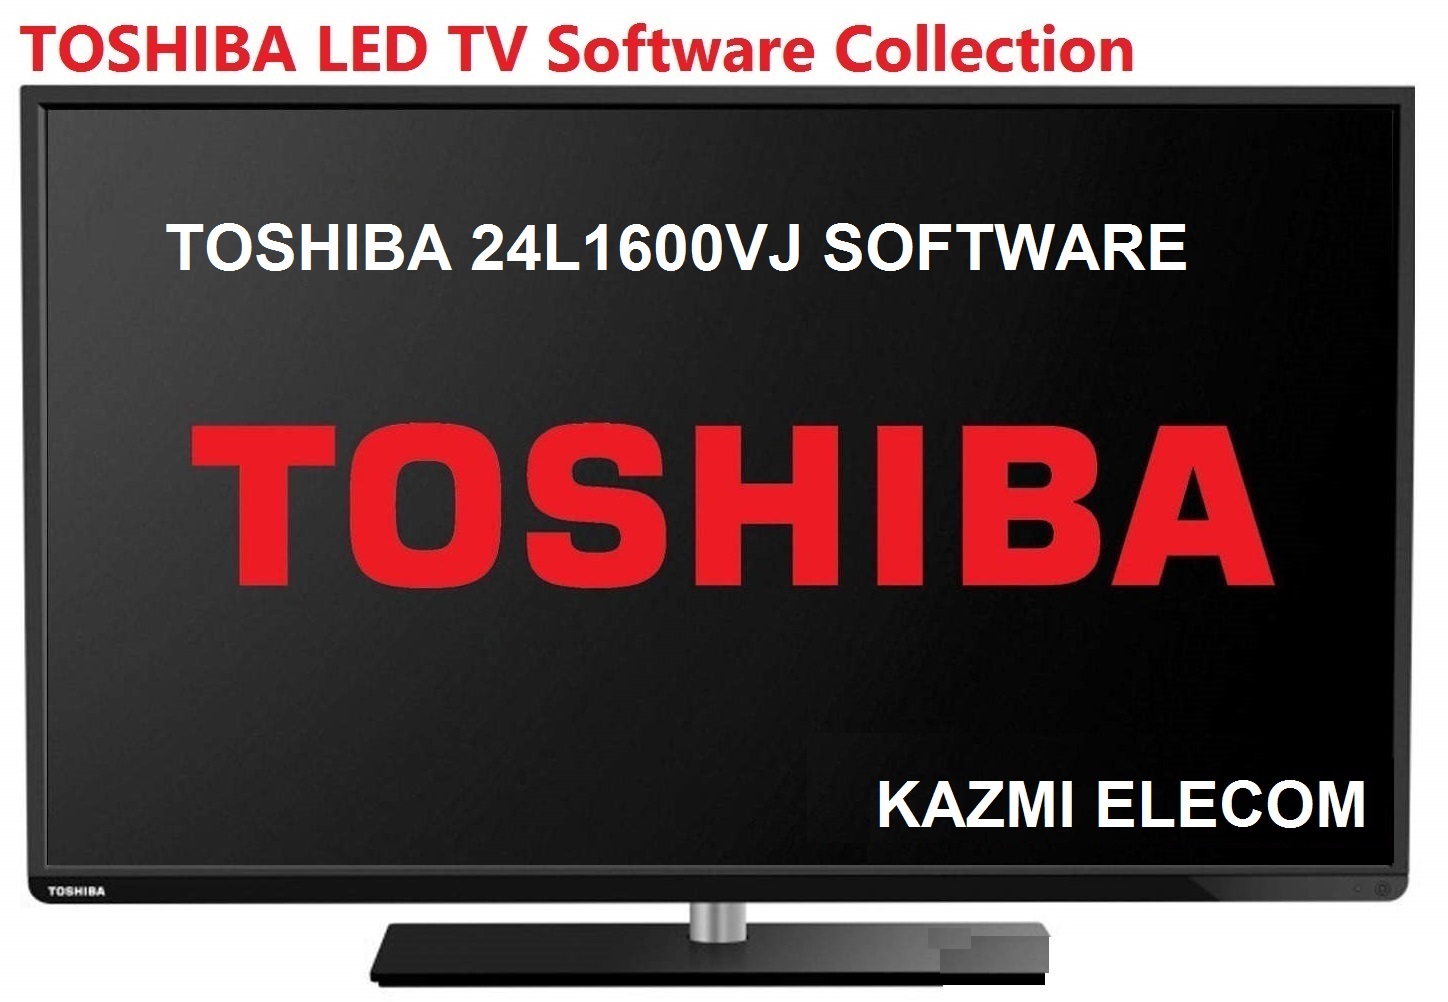 Toshiba 24L1600Vj